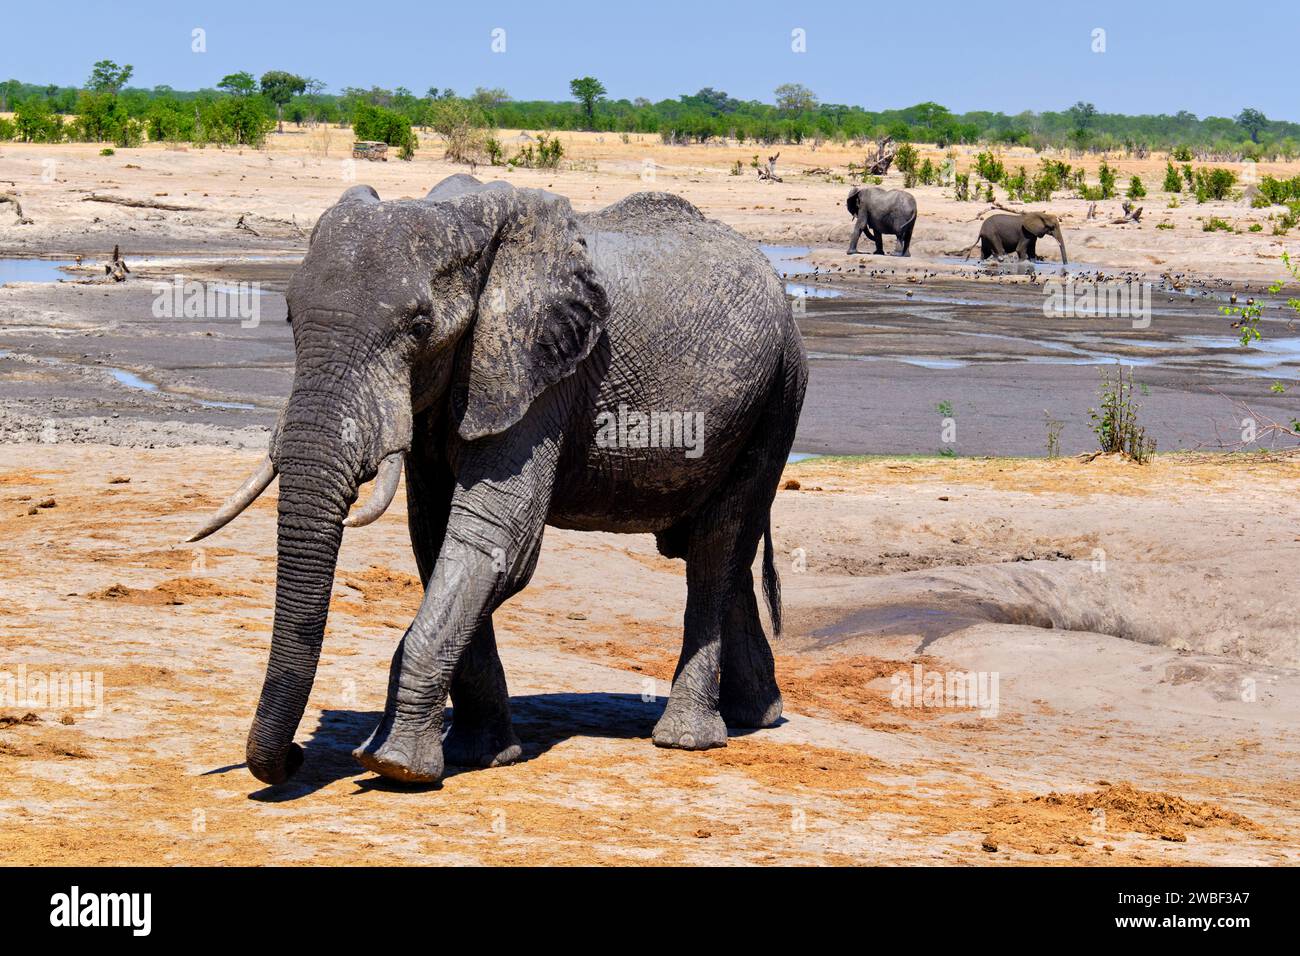 Zimbabwe, Matabeleland North, provincia, parco nazionale di Hwange, elefanti africani selvatici (Loxodonta africana) in un punto d'acqua Foto Stock